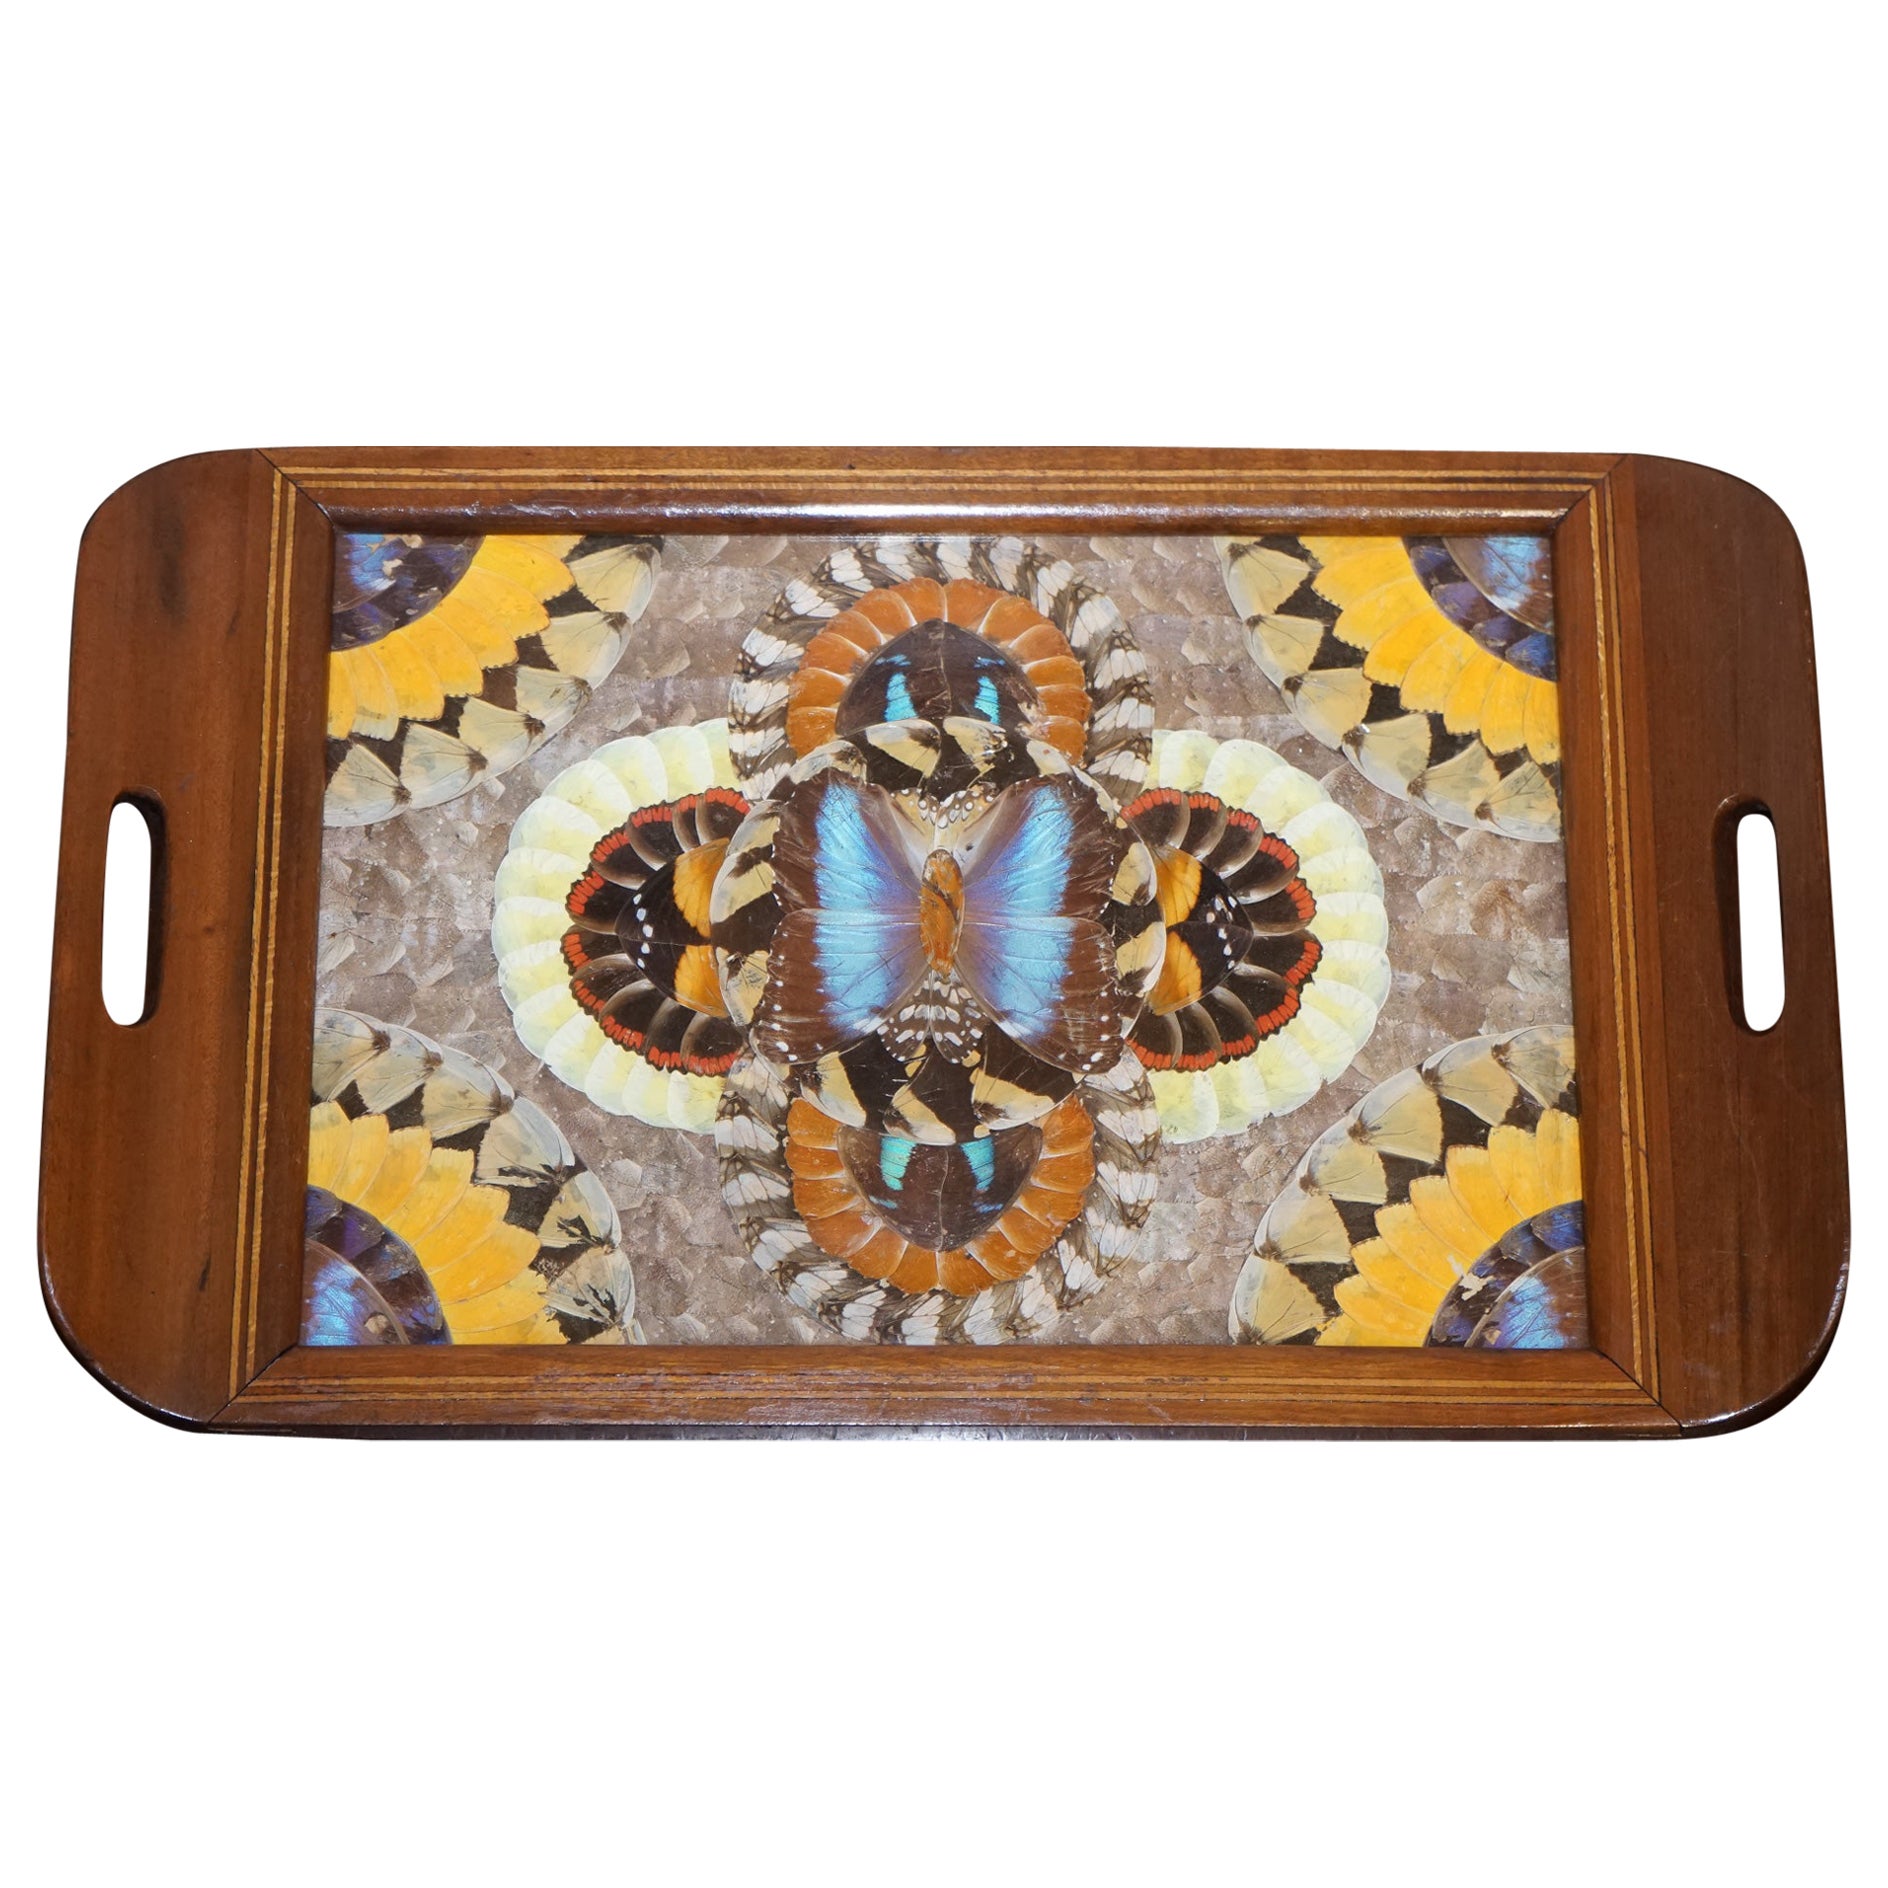 Vintage brasilianischen Intarsien Holz Tablett mit echten Morpho Schmetterlingsflügeln